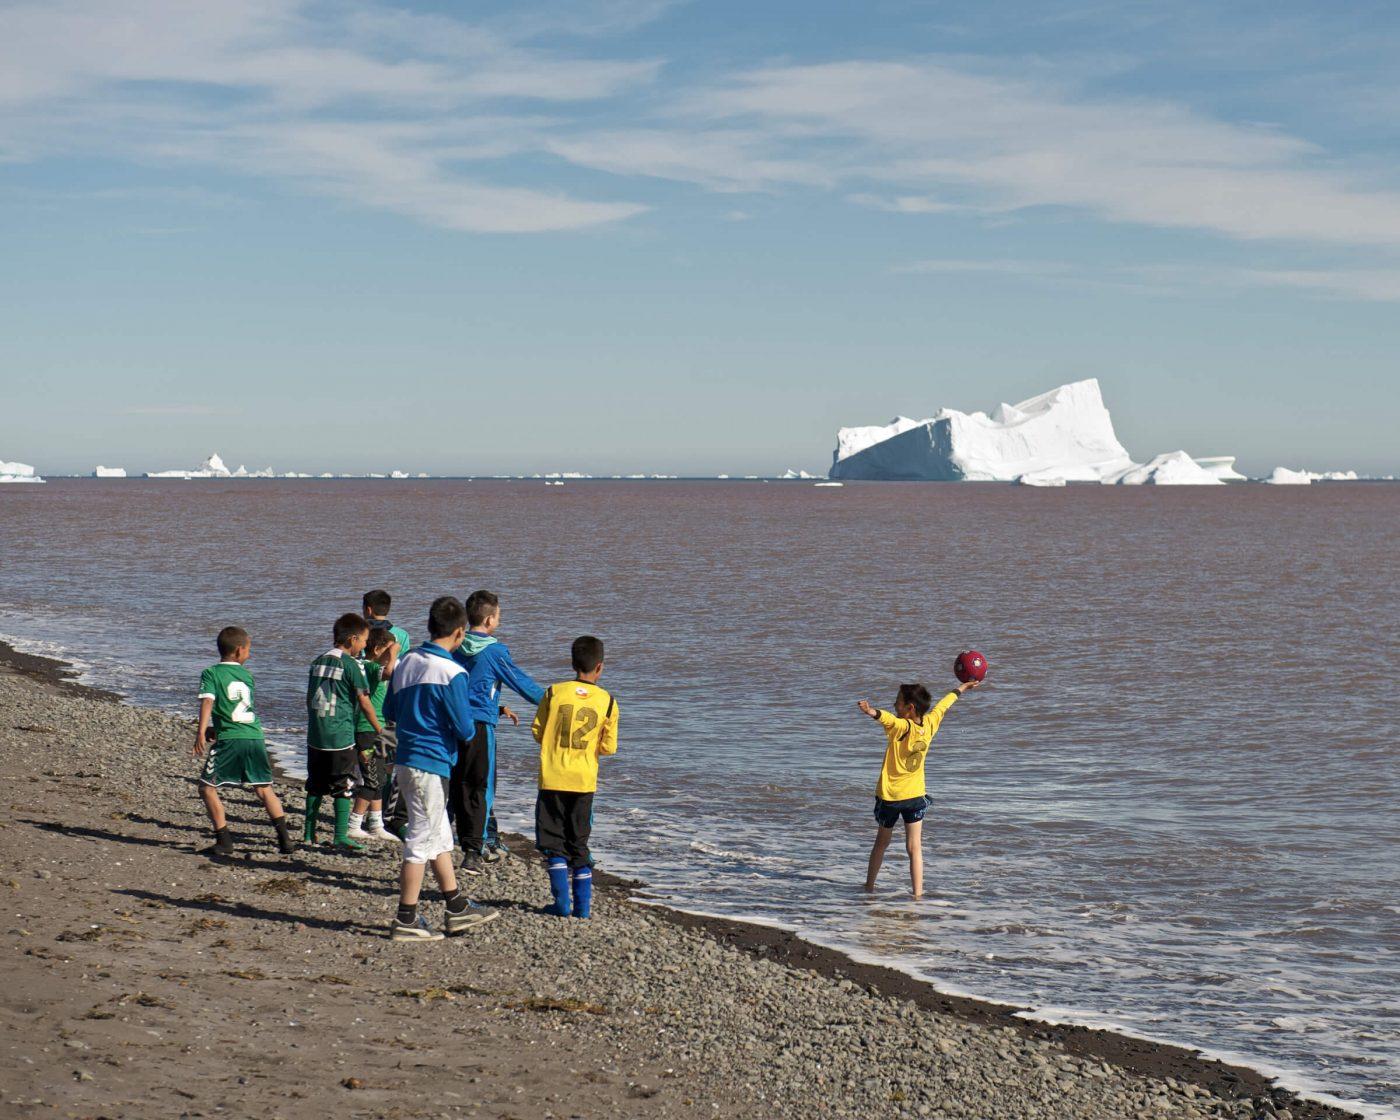 Kids playing on the beach, Qeqertarsuaq. Photo by Mads Pihl.